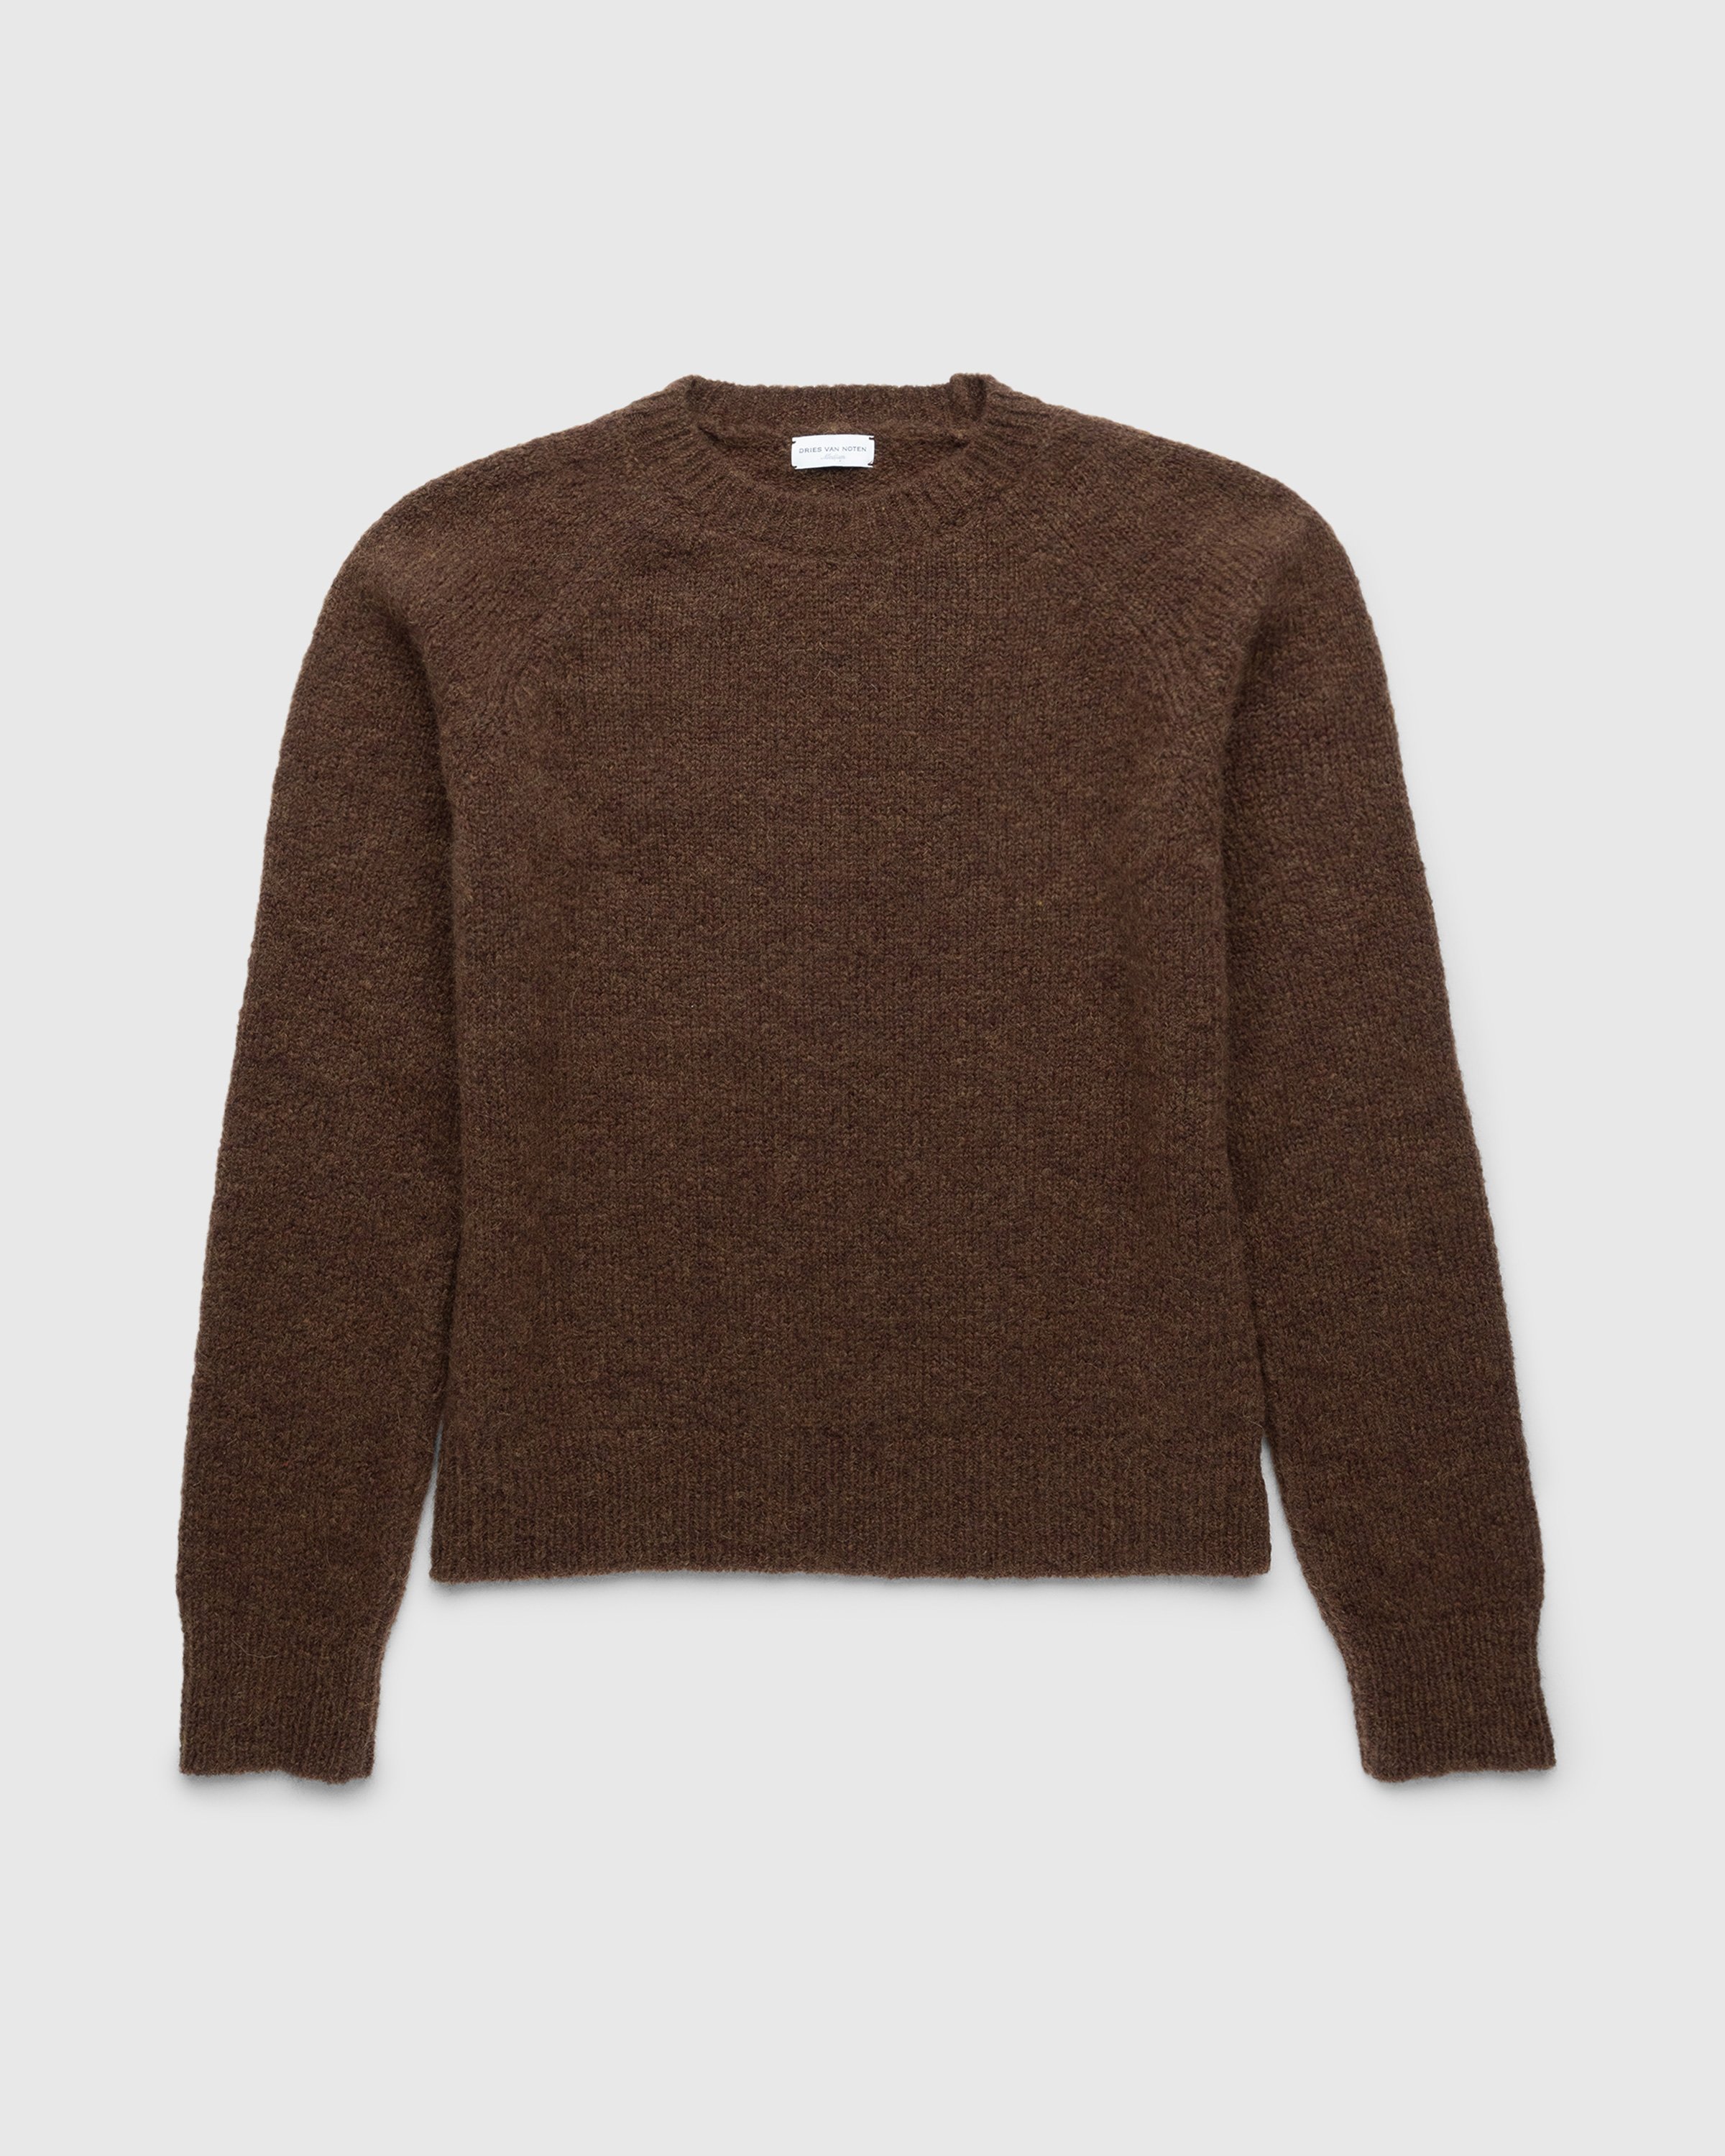 Dries van Noten - Melbourne Knit Brown - Clothing - Brown - Image 1